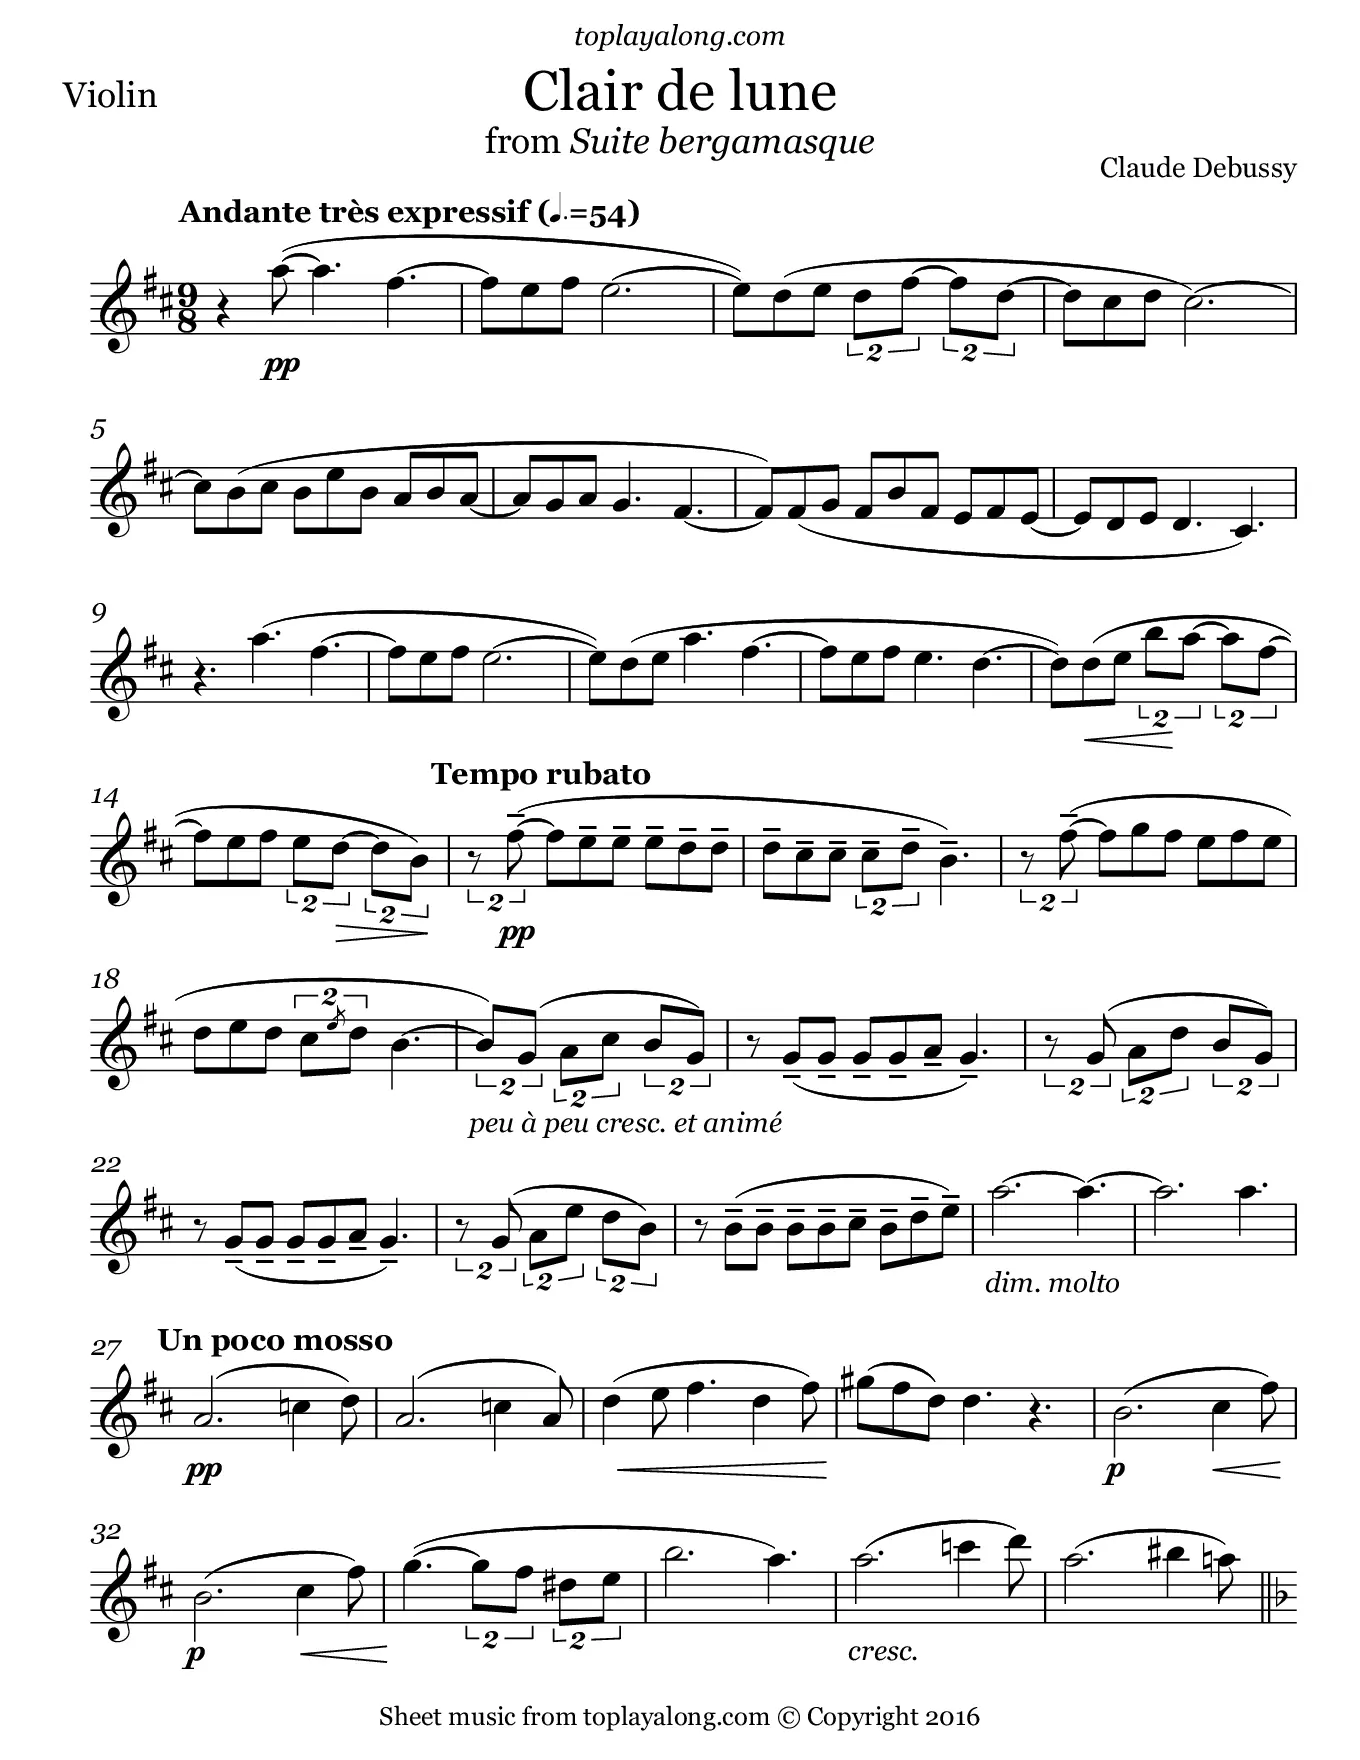 claire de lune violin - Is Clair de lune hard for beginners